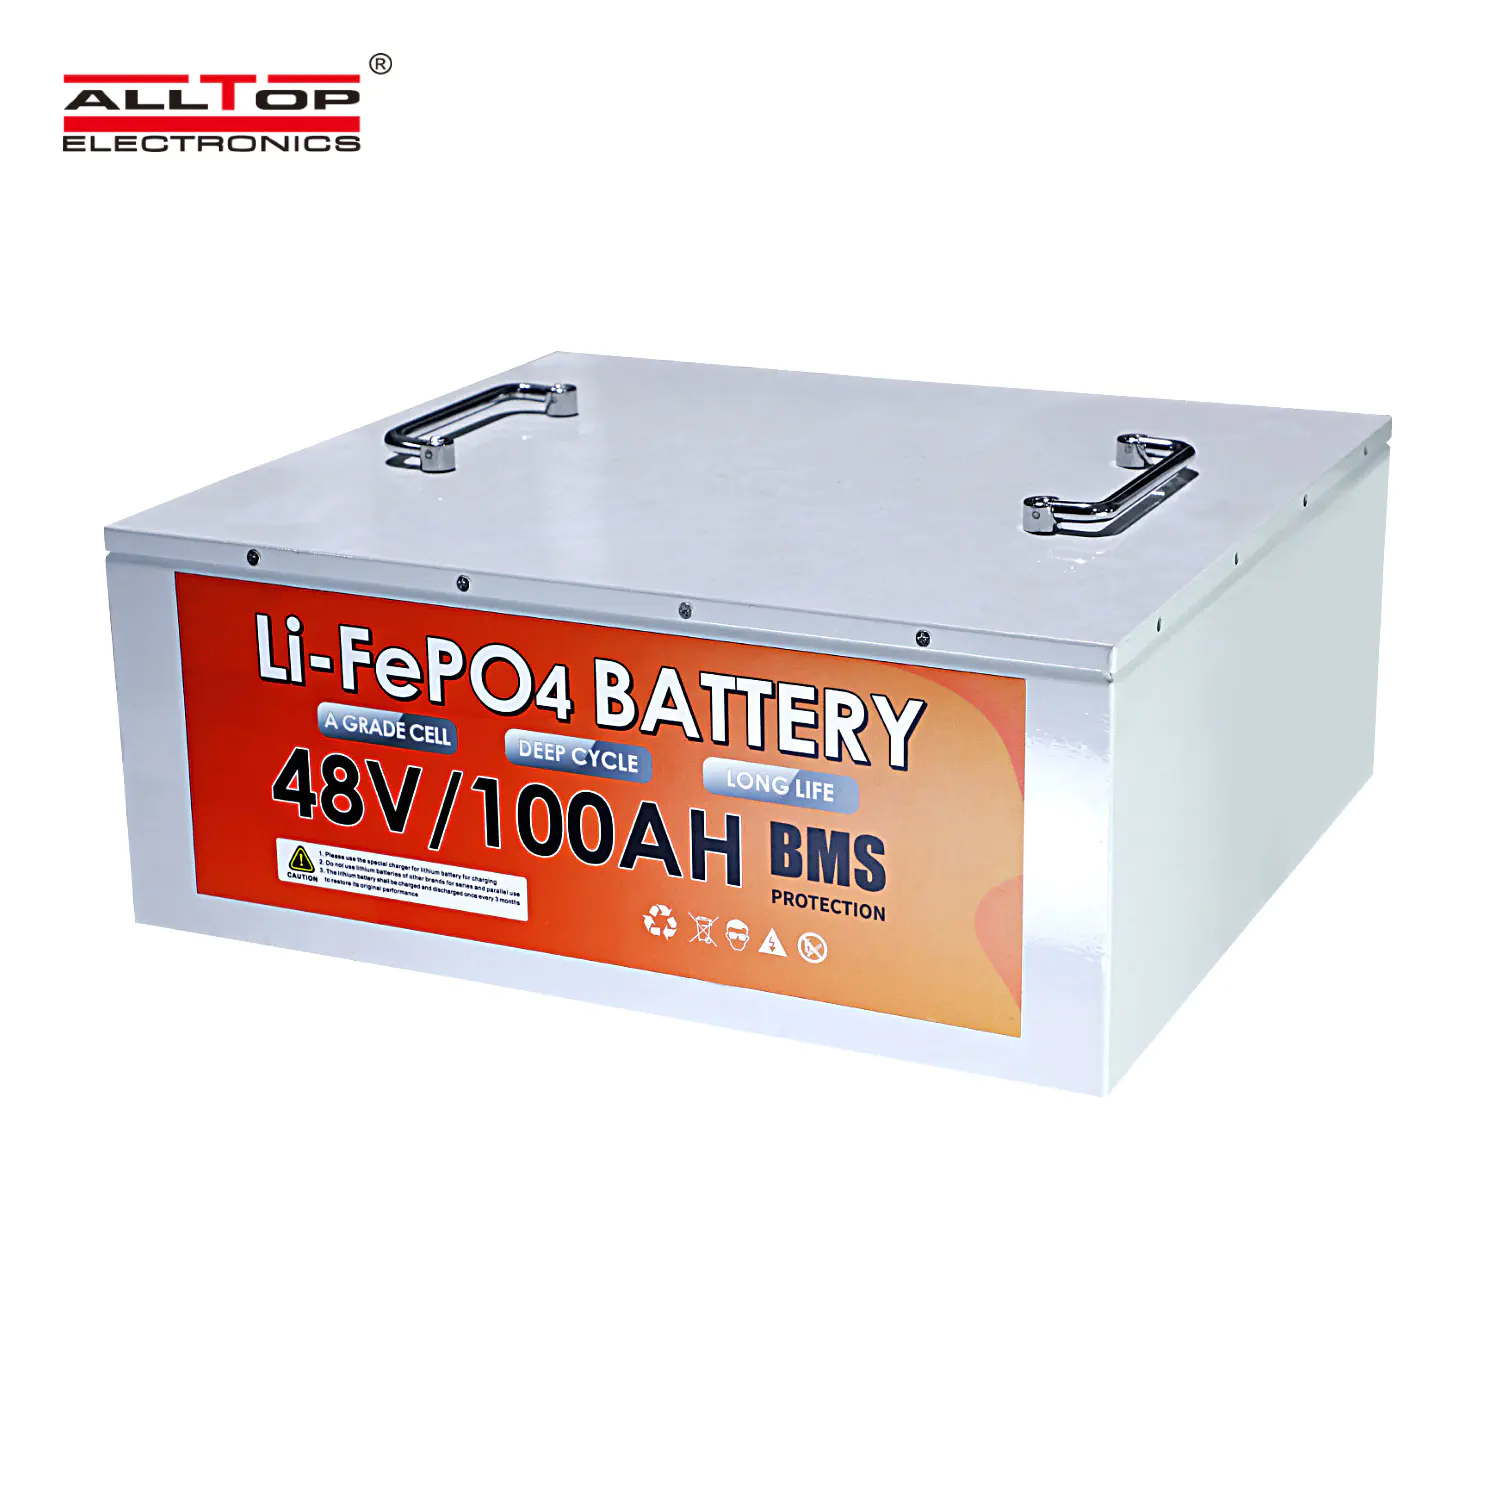 ALLTOP 2022 Case 600 Amp Lithium Batteries 3.7 V 2600 Mah Fotovoltaico Basen 200a Batterie 36 Volts Lifep04 Battery